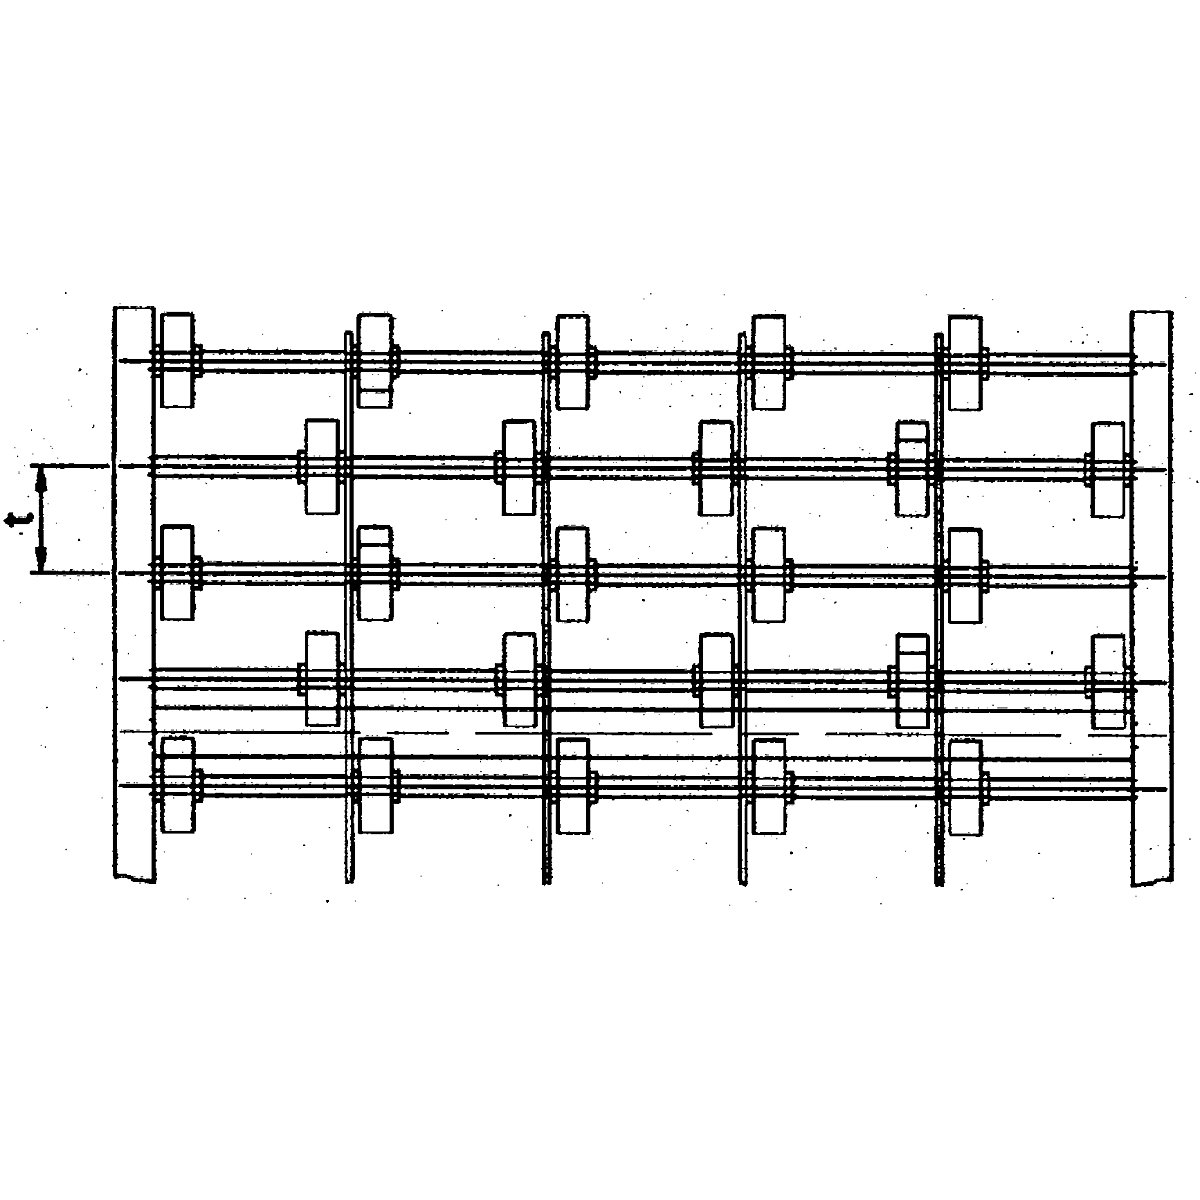 Gura – Light duty roller conveyor, aluminium frame with plastic rollers (Product illustration 4)